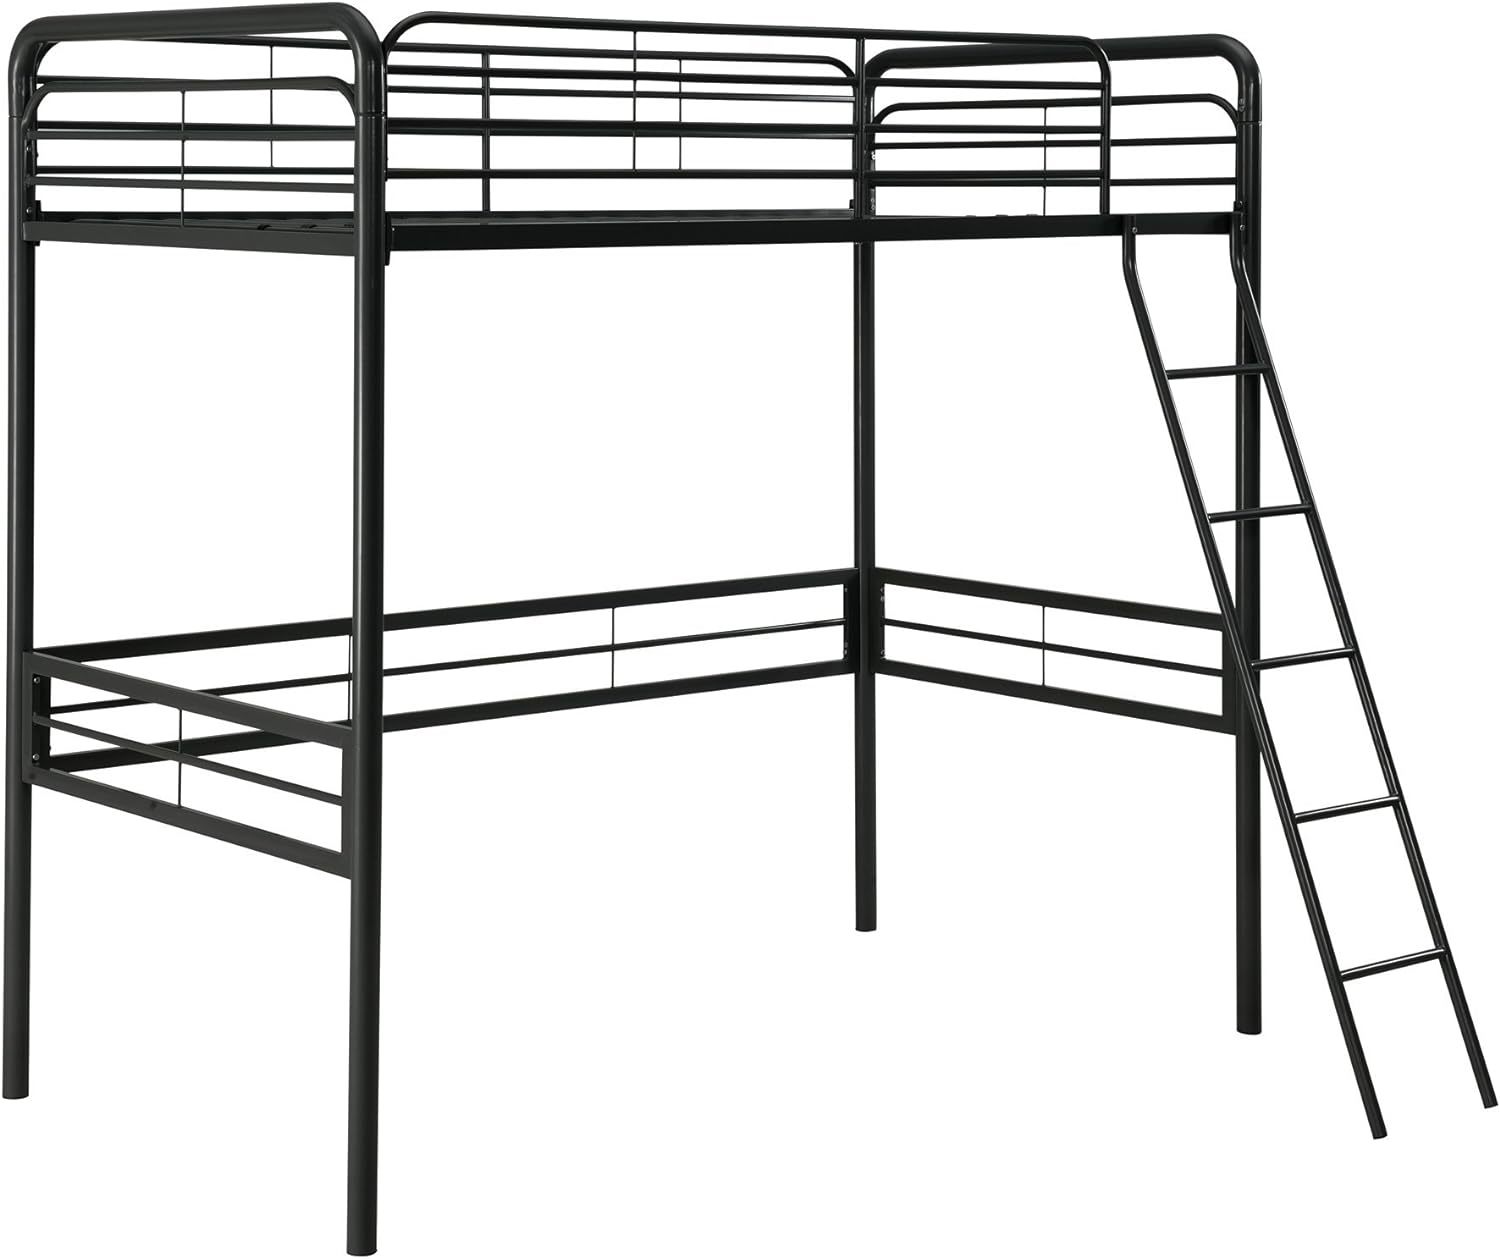 Dhp Multipurpose Simple Metal Loft Bed Frame, Twin Size, Black. - $207.95